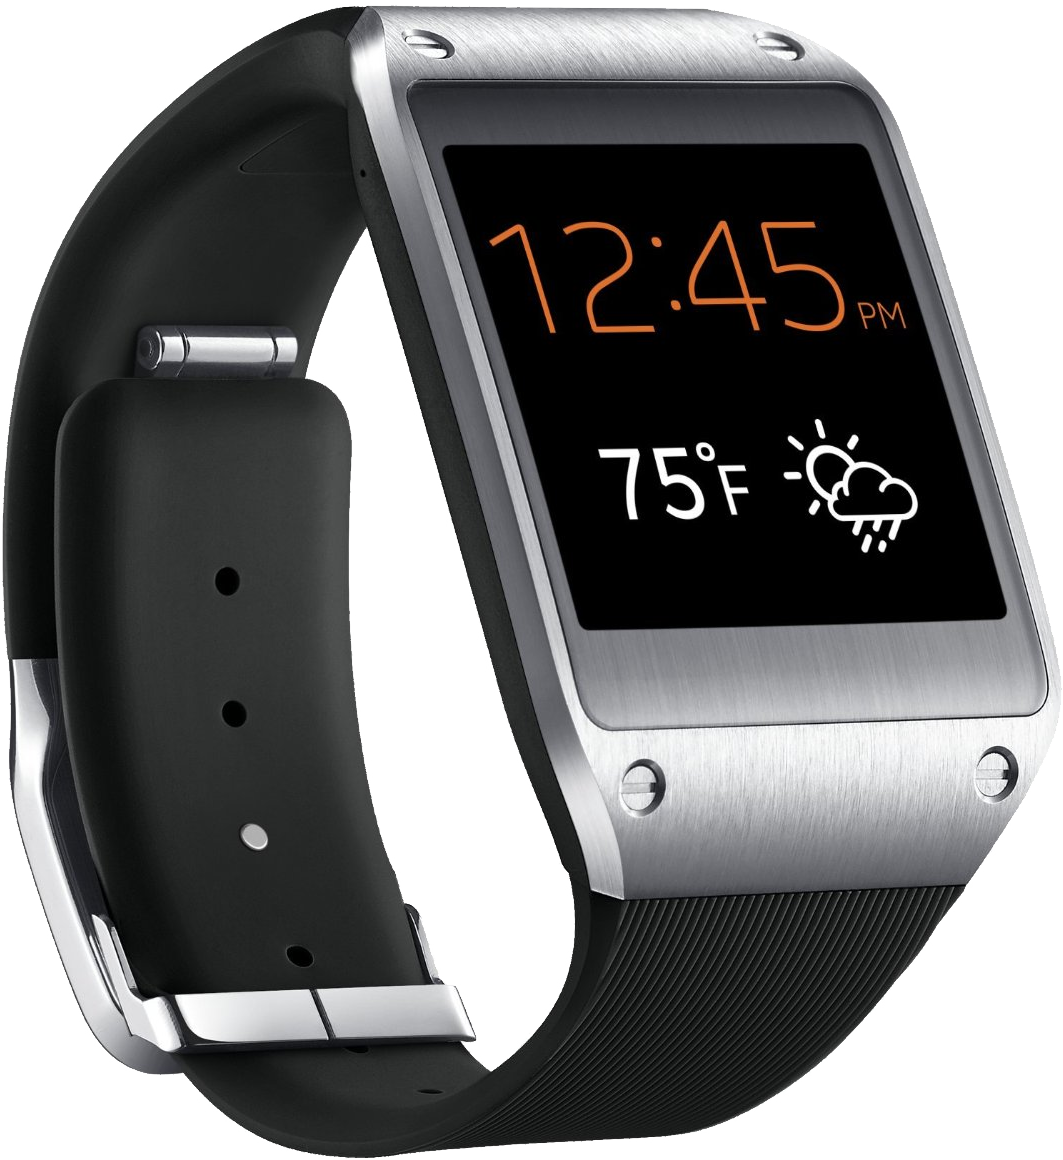 Gear Watches Samsung Smartwatch Camera Galaxy Smart PNG Image